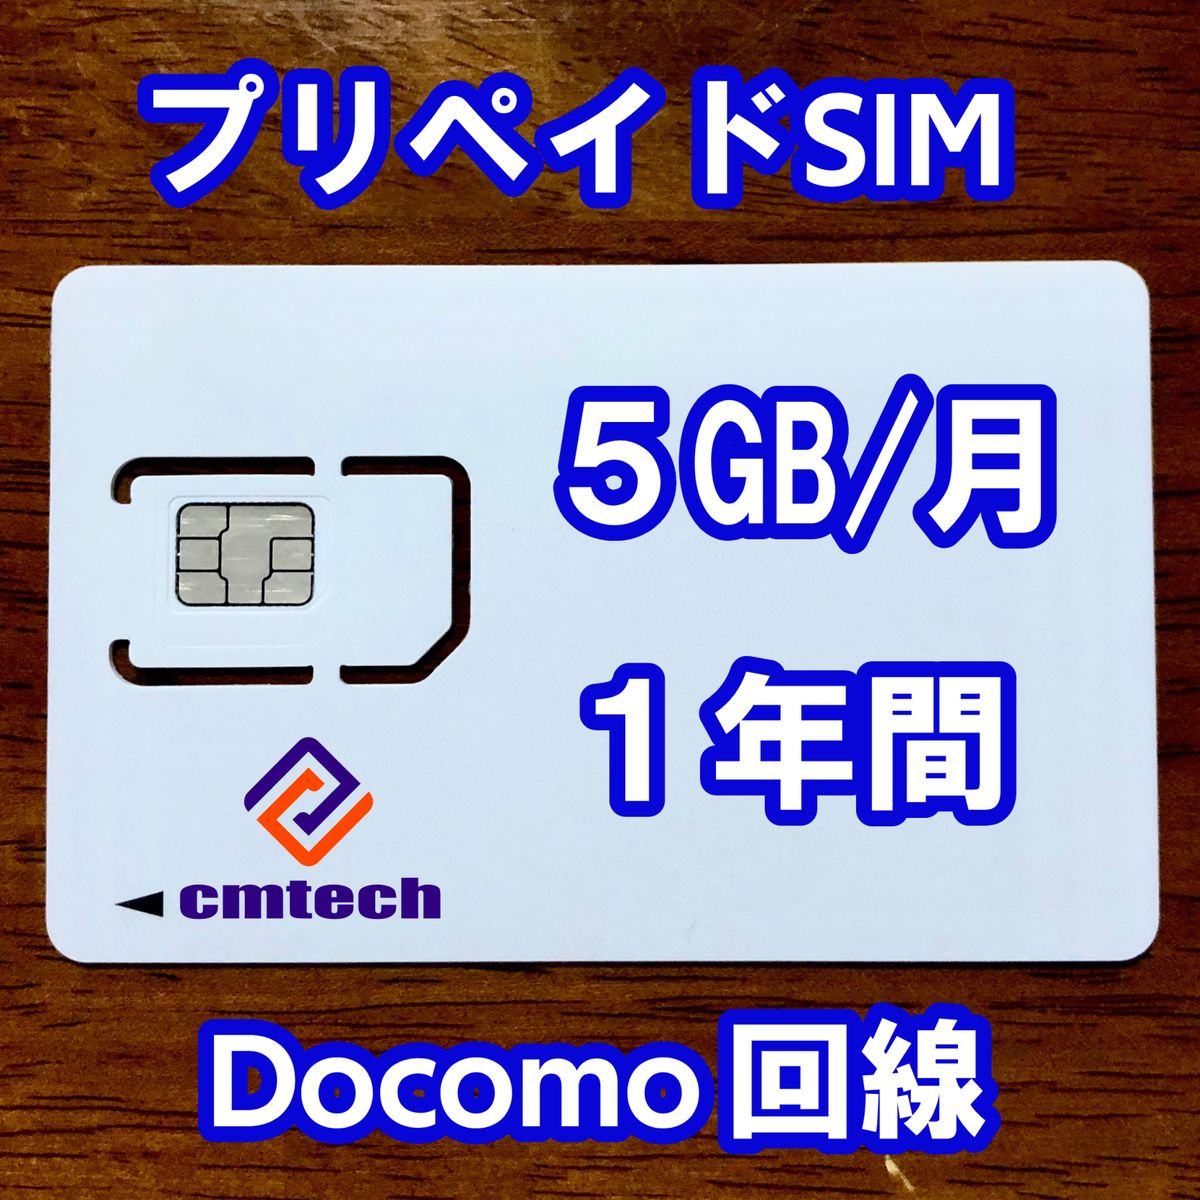 Docomo回線 プリペイドsim 5GB/月1年間有効 データ通信simカード